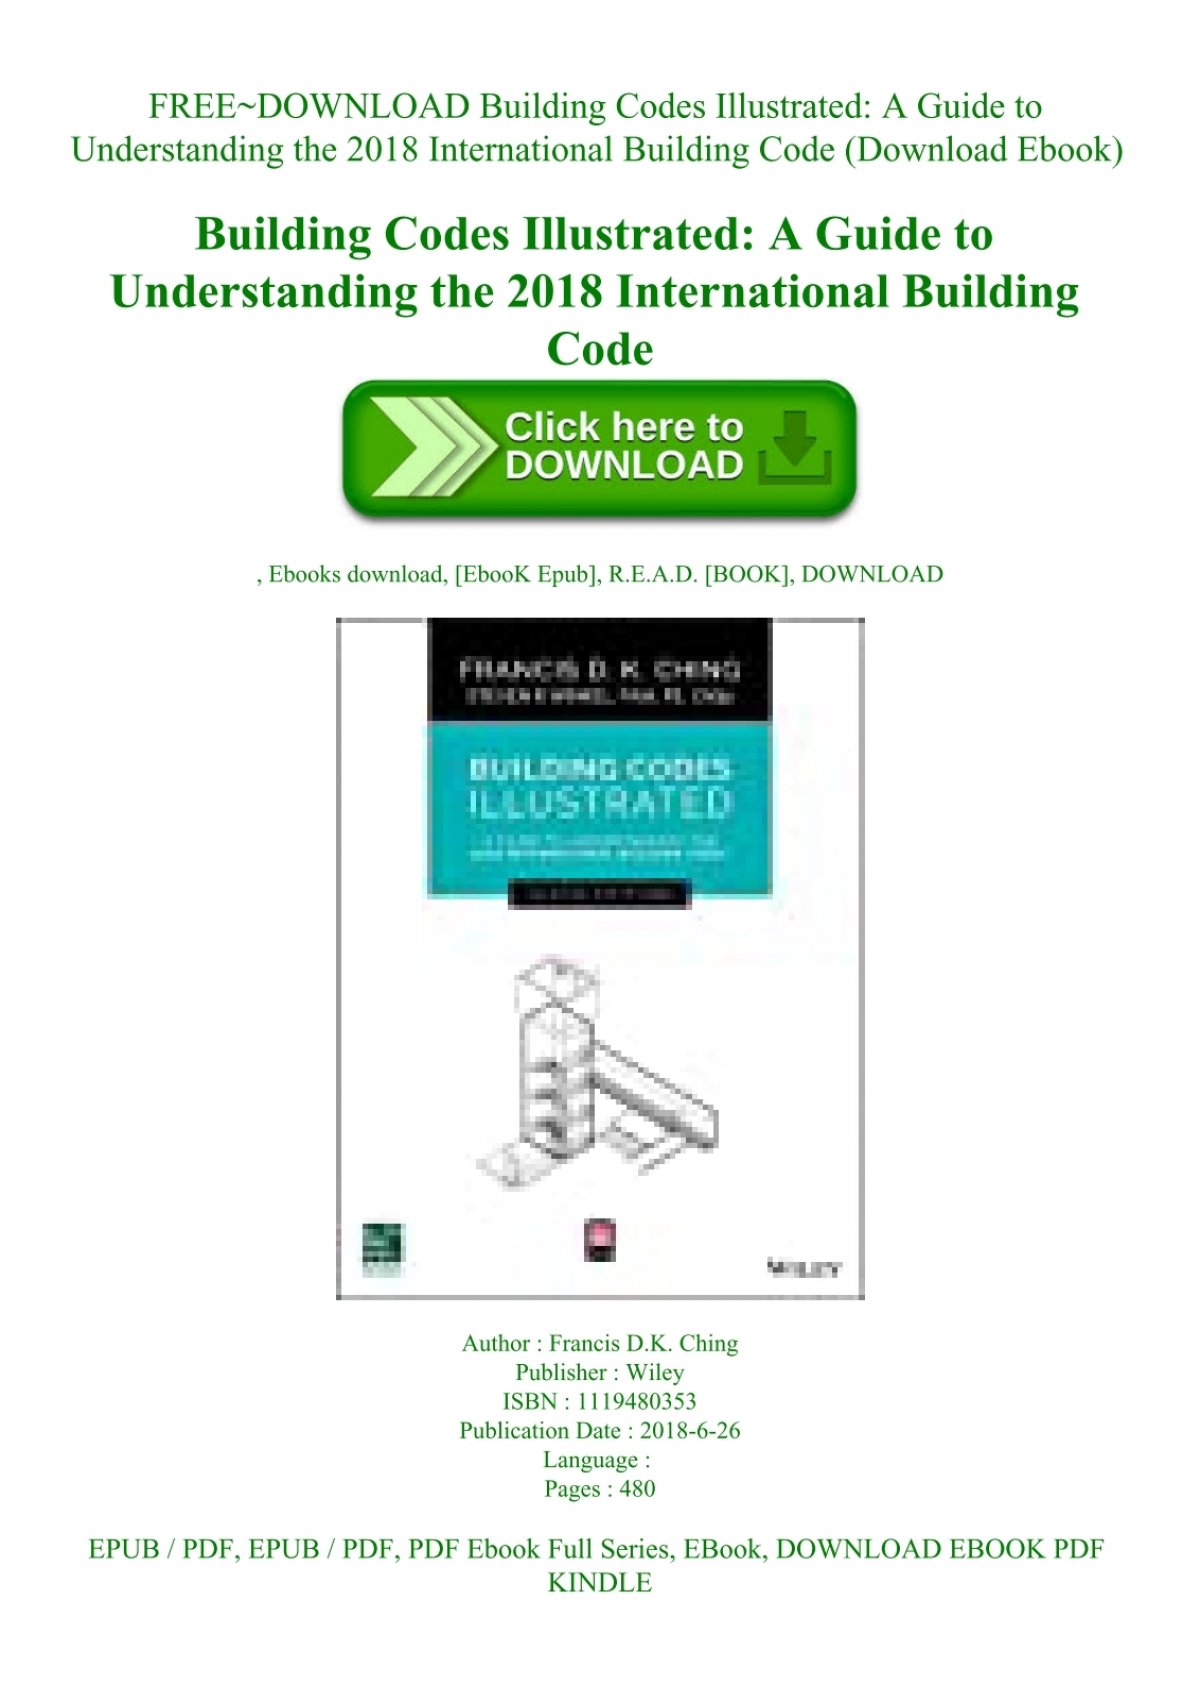 2018 international building code illustrated handbook pdf download free